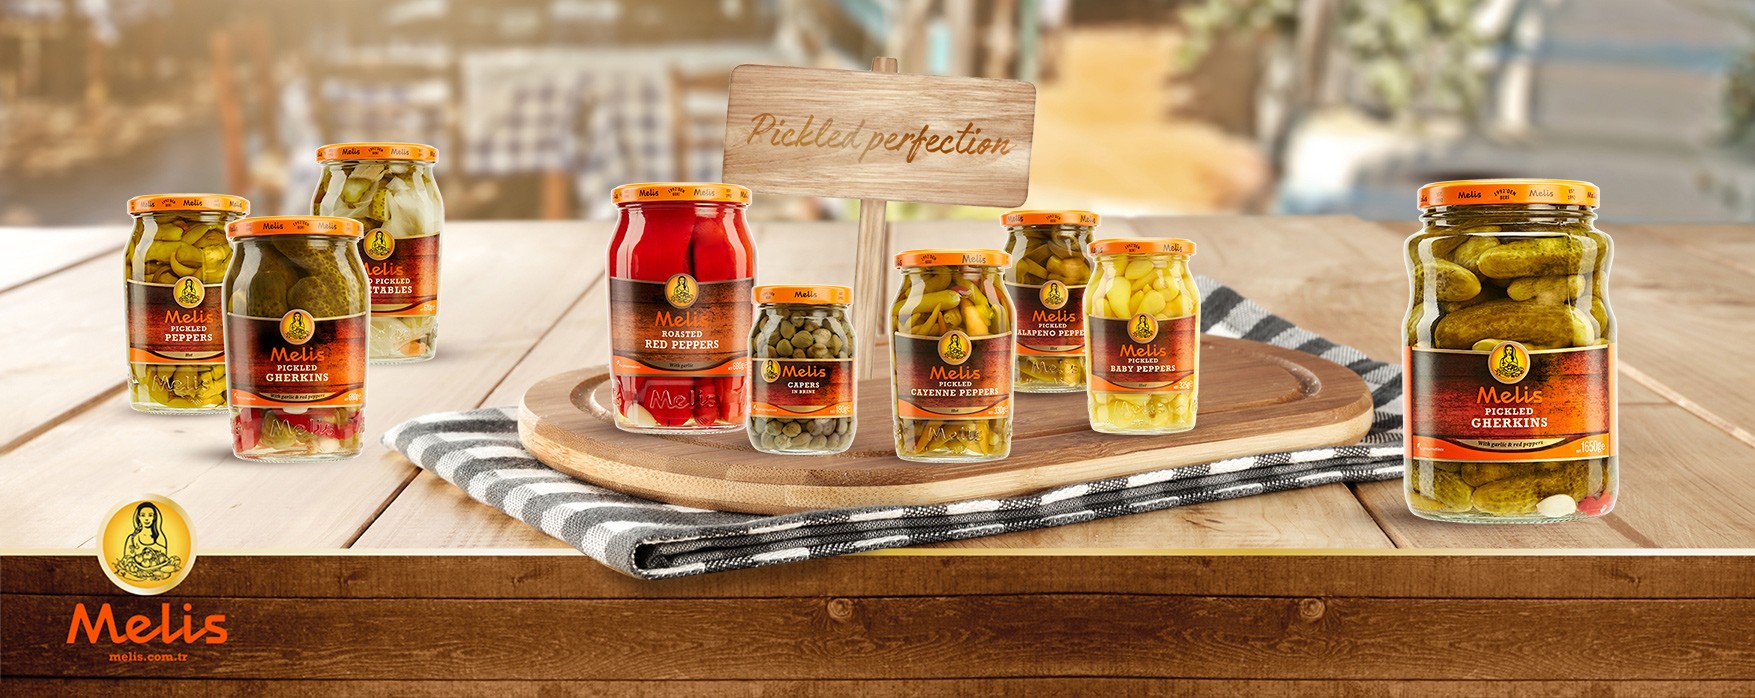 Buy online Melis Pickle from grocina.com